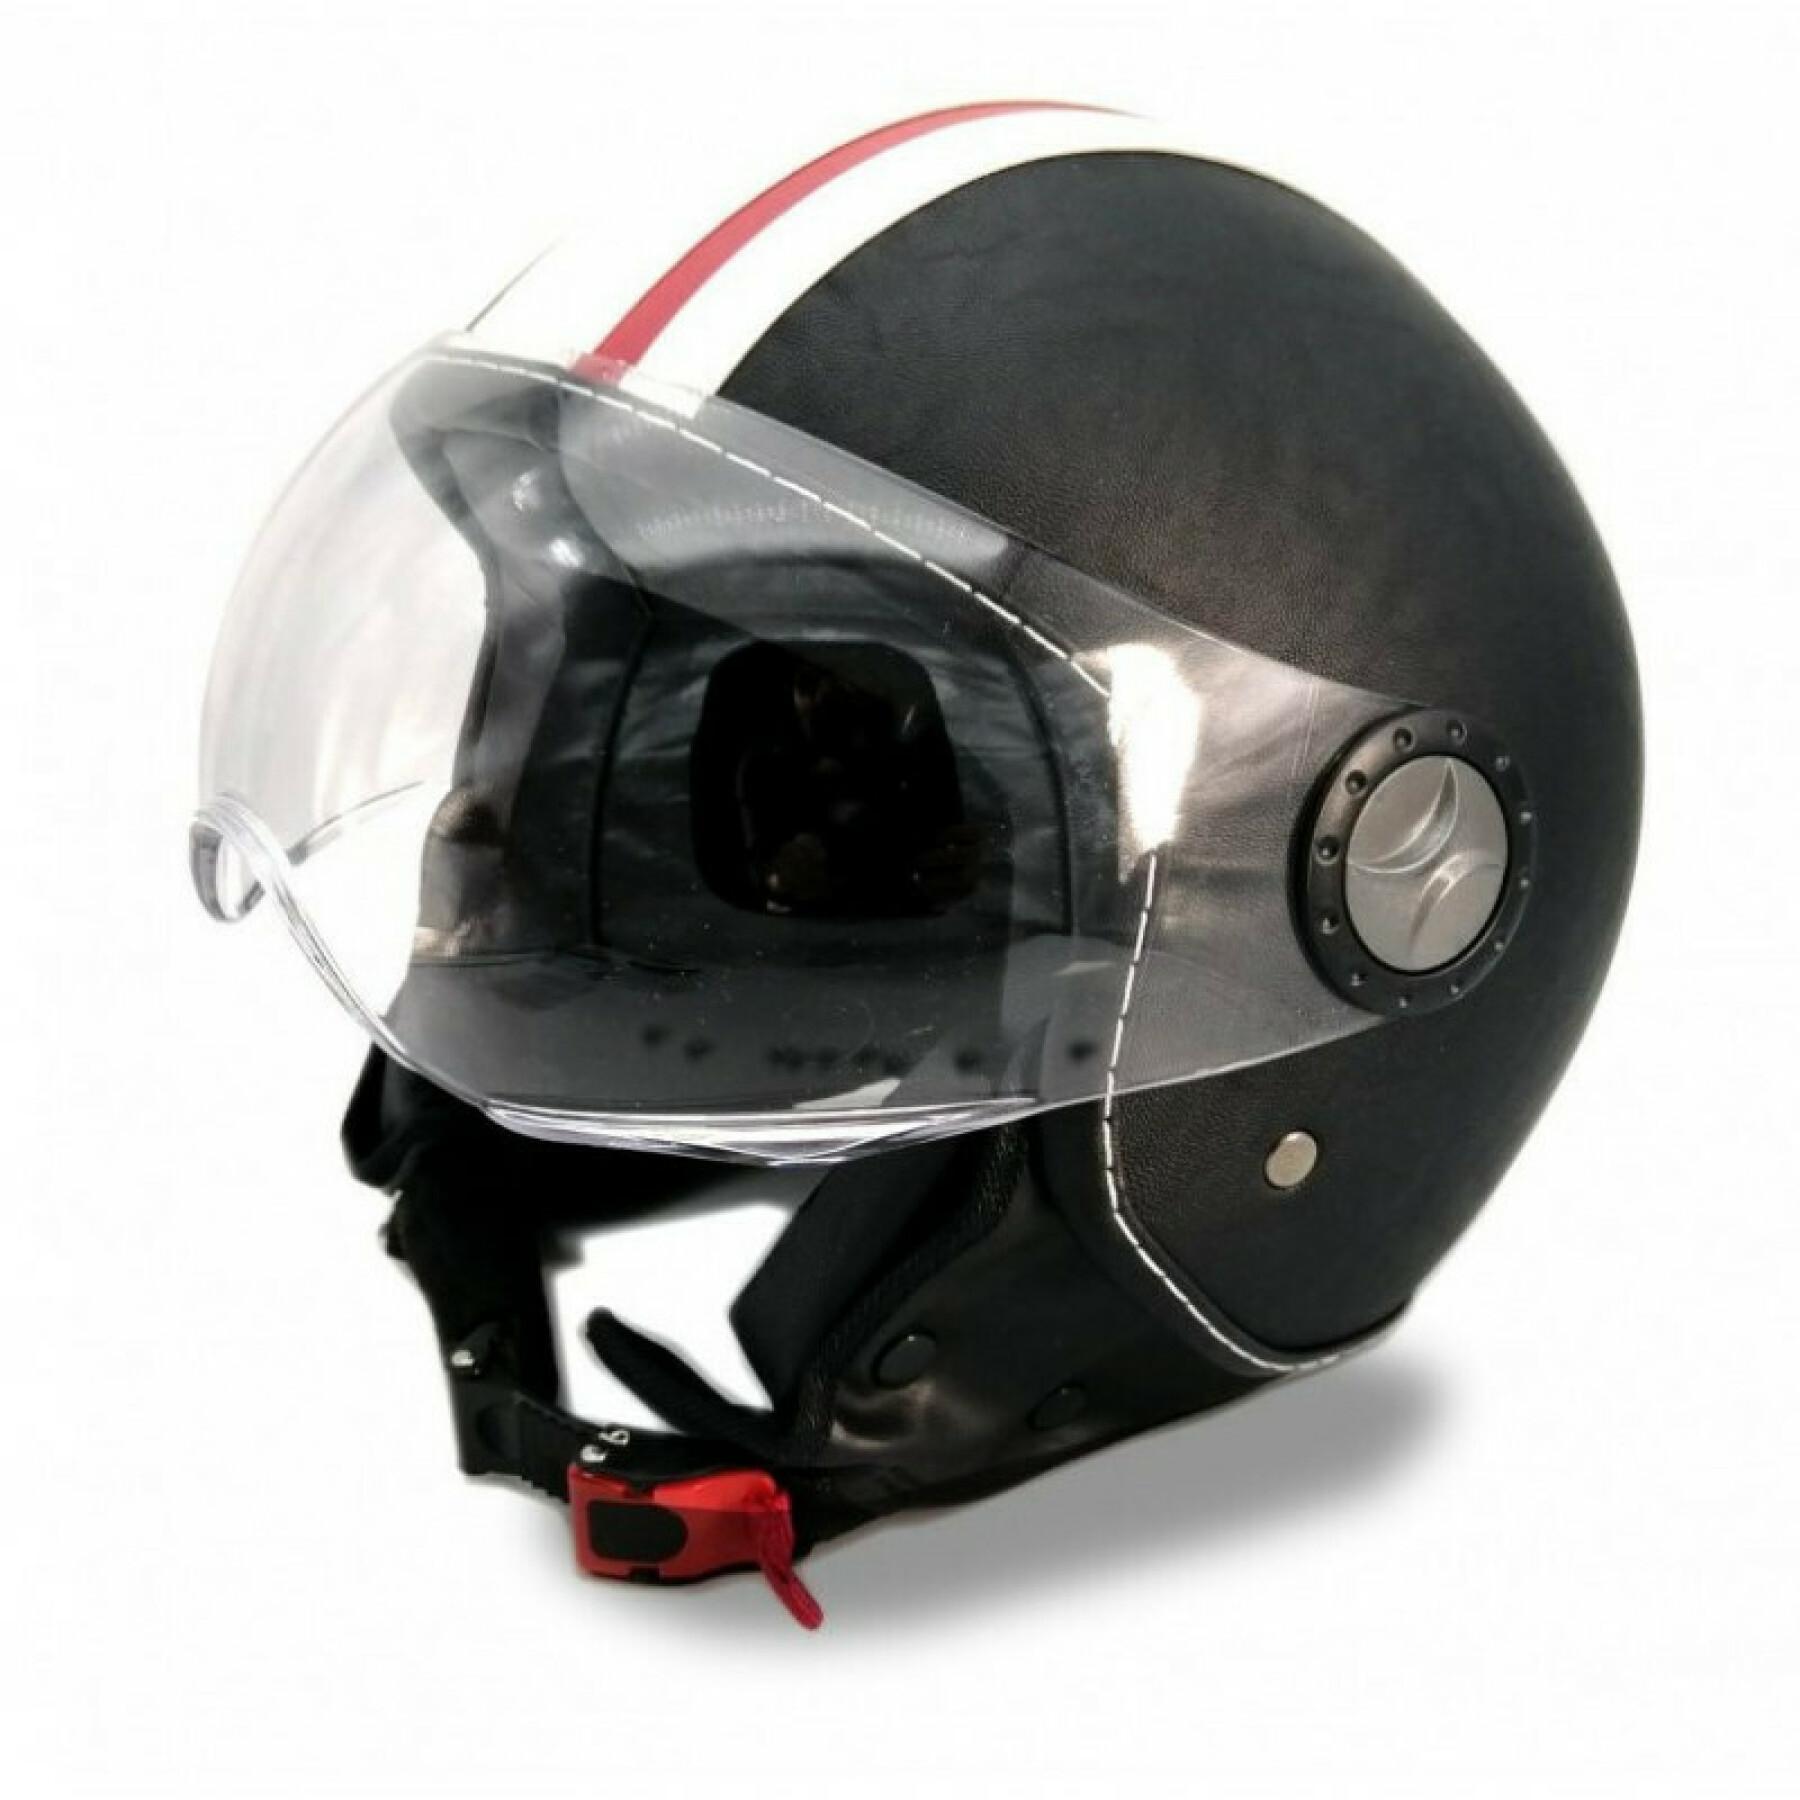 Casque moto jet cuir series Vito Helmets roma